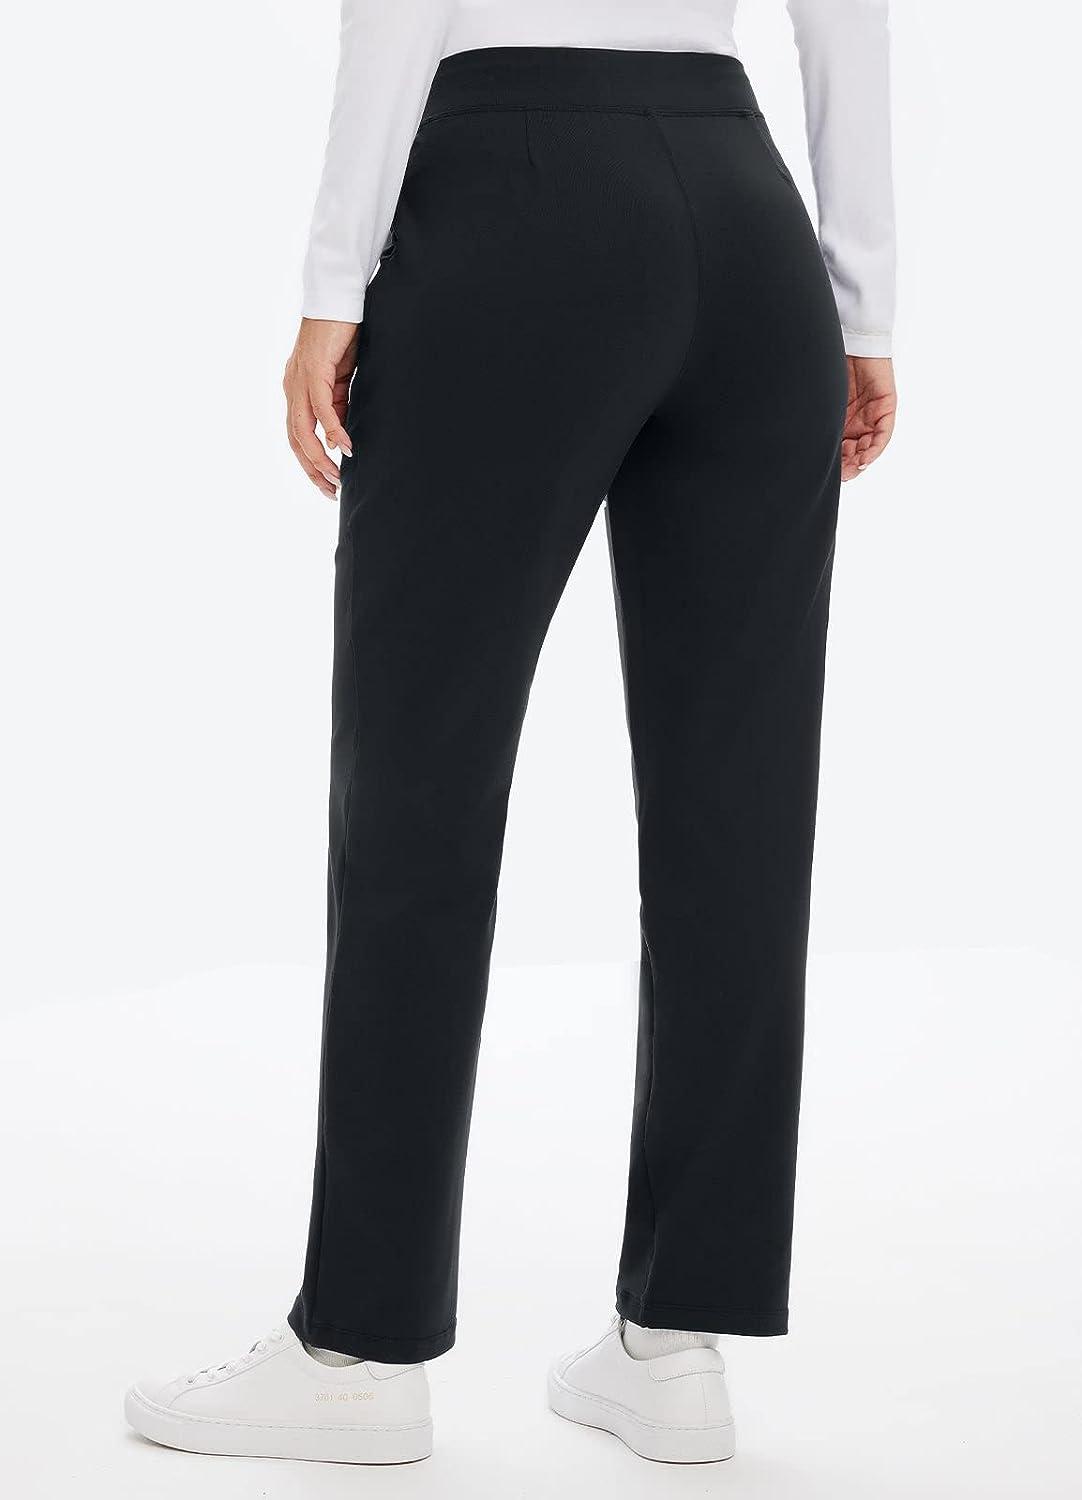 BALEAF Women's Straight Leg Golf Pants Stretch Sweatpants Pull-on Dress  Work Pants with Zipper Pockets Black Large